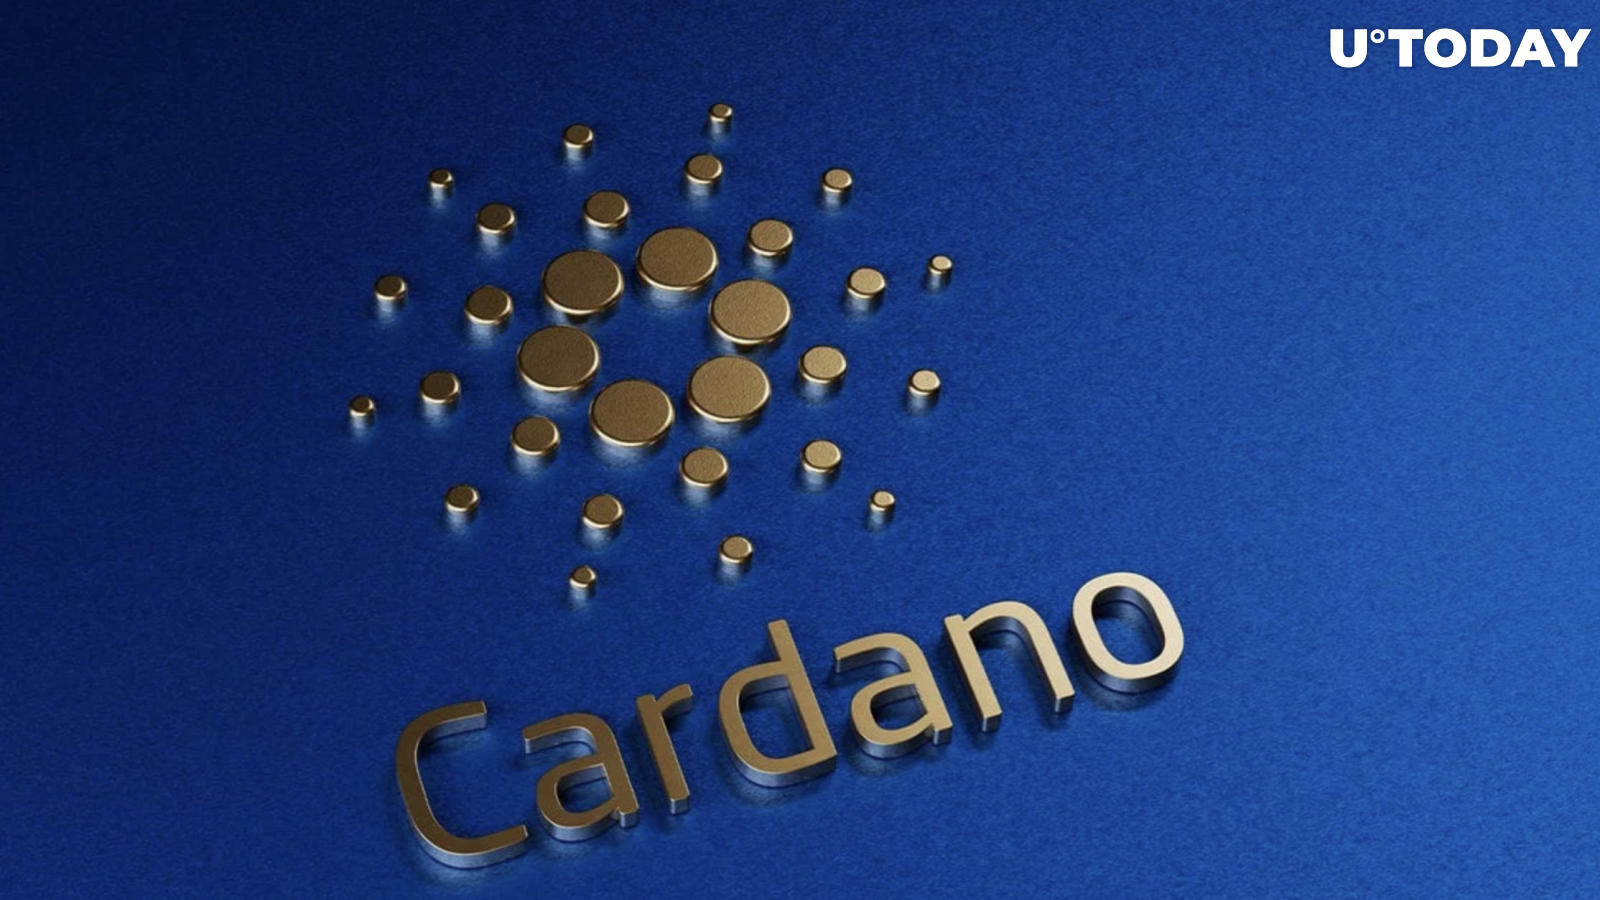 Cardano Foundation CEO Explains What Happens After SPO Vote